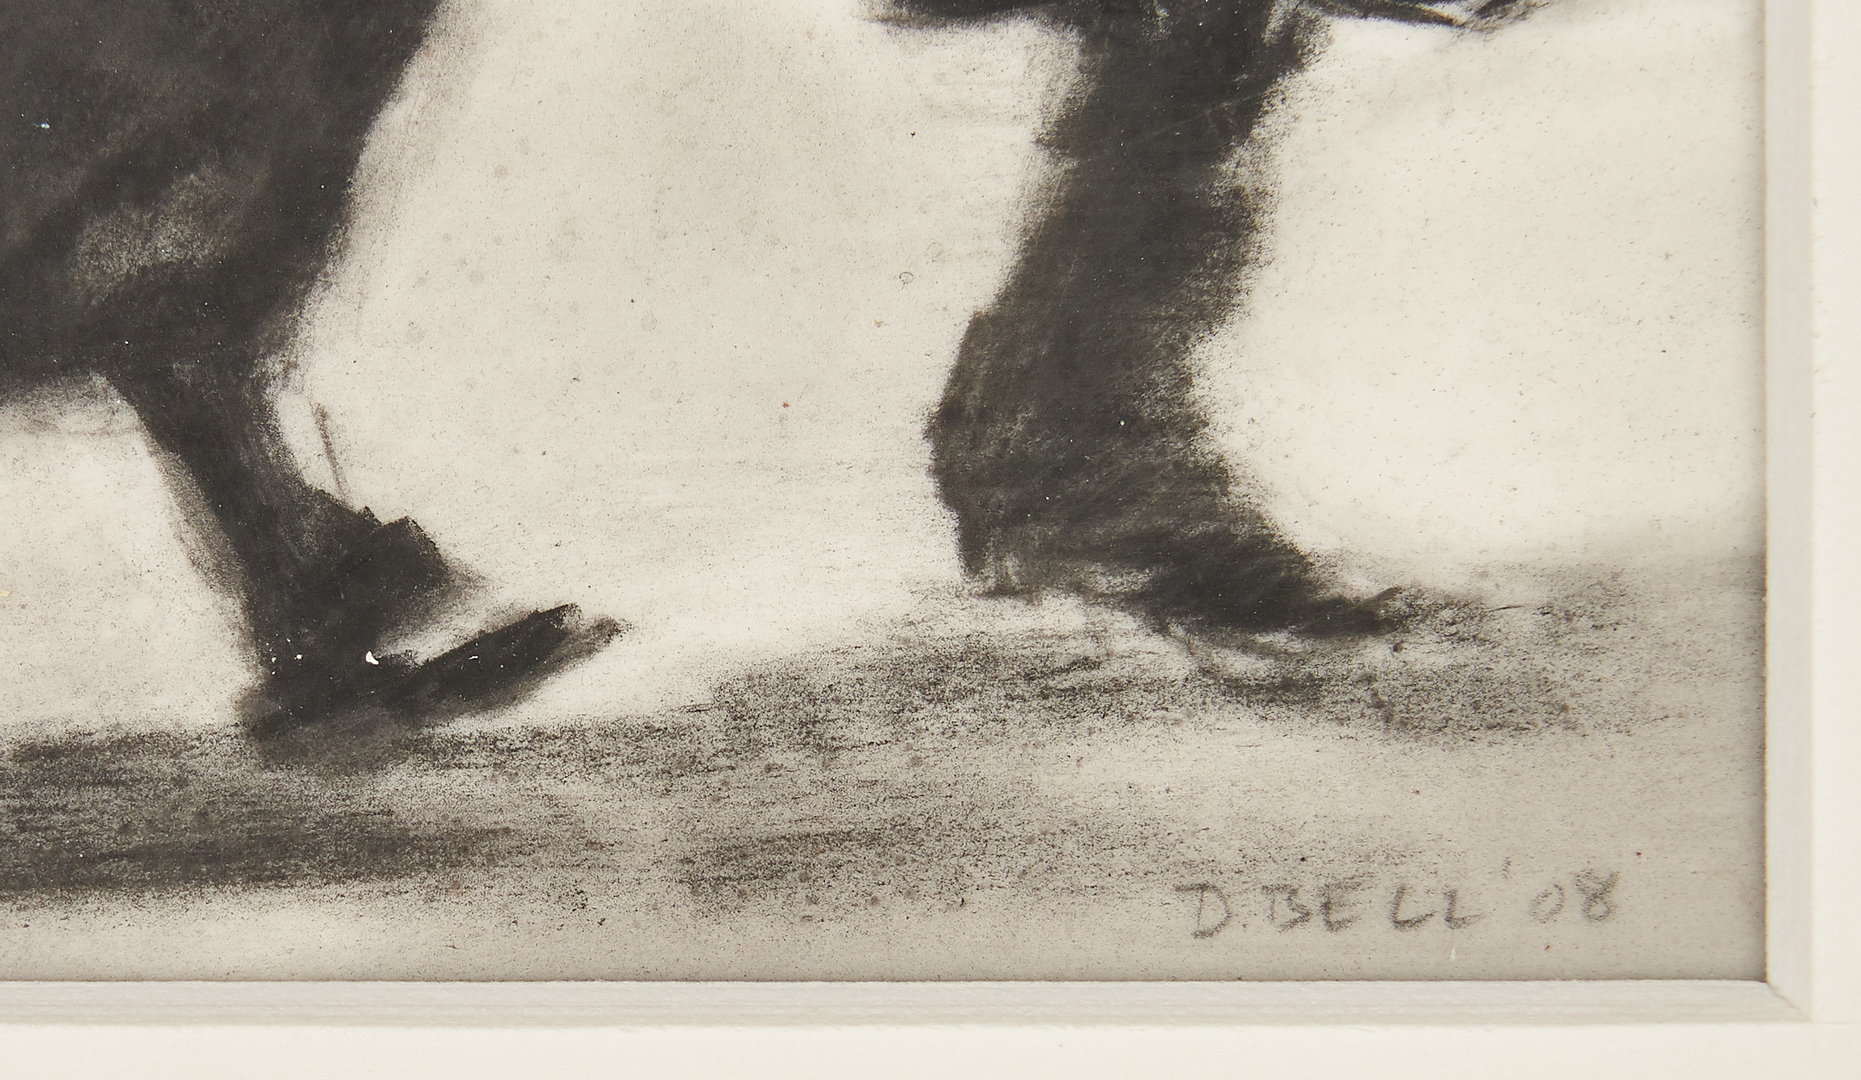 Lot 993: Dozier Bell Drawing of Two Women Walking